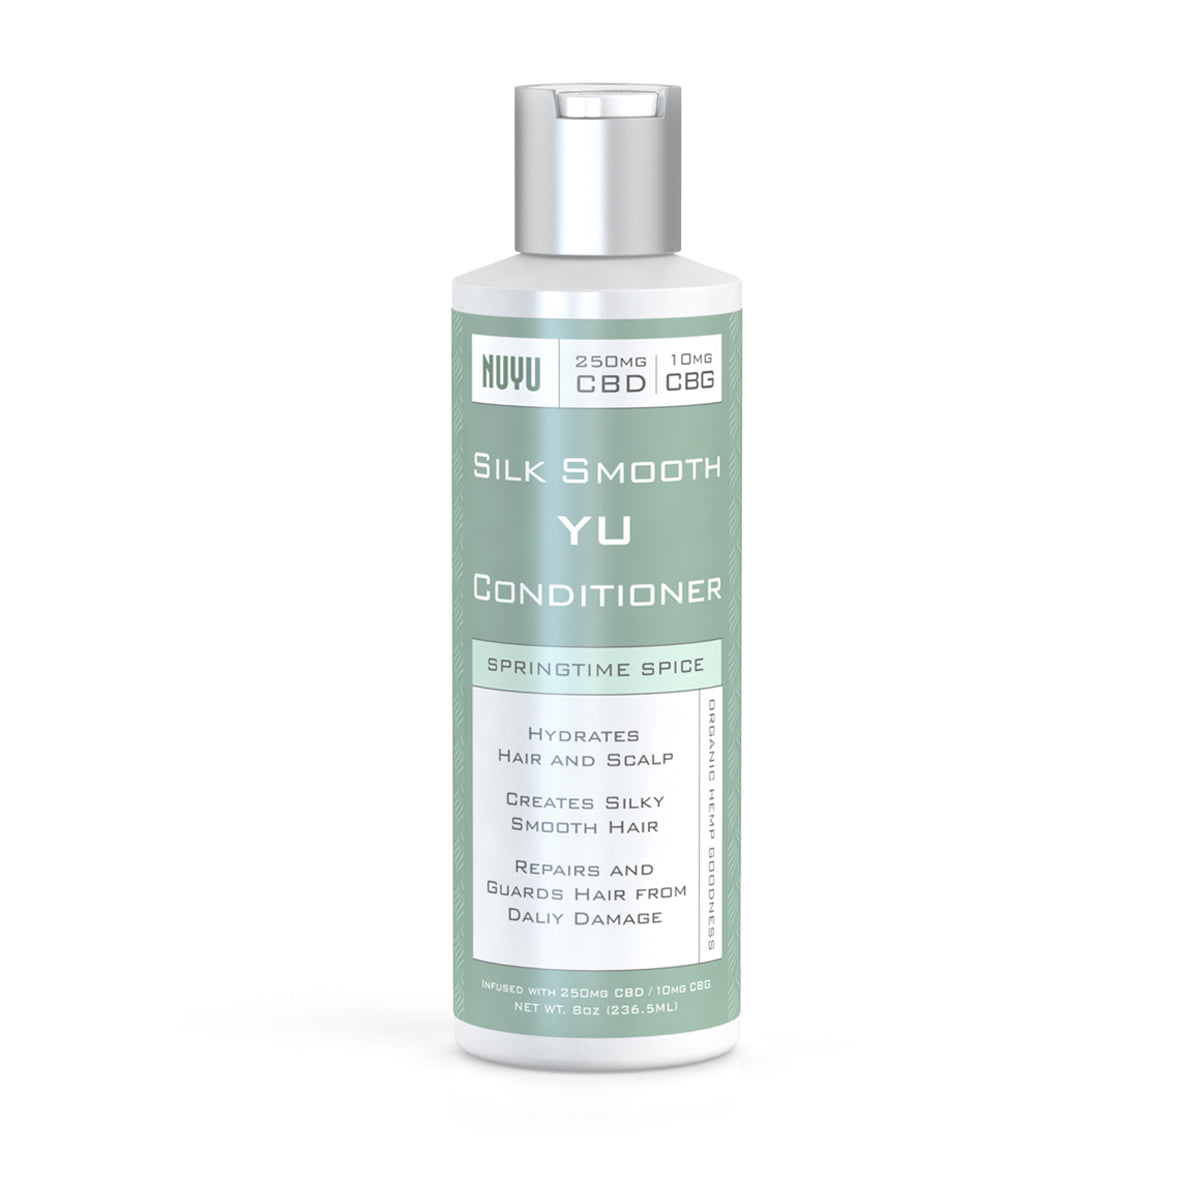 NUYU Silk Smooth YU Conditioner - Springtime Spice - 8oz | CBD: 250mg | CBG: 10mg